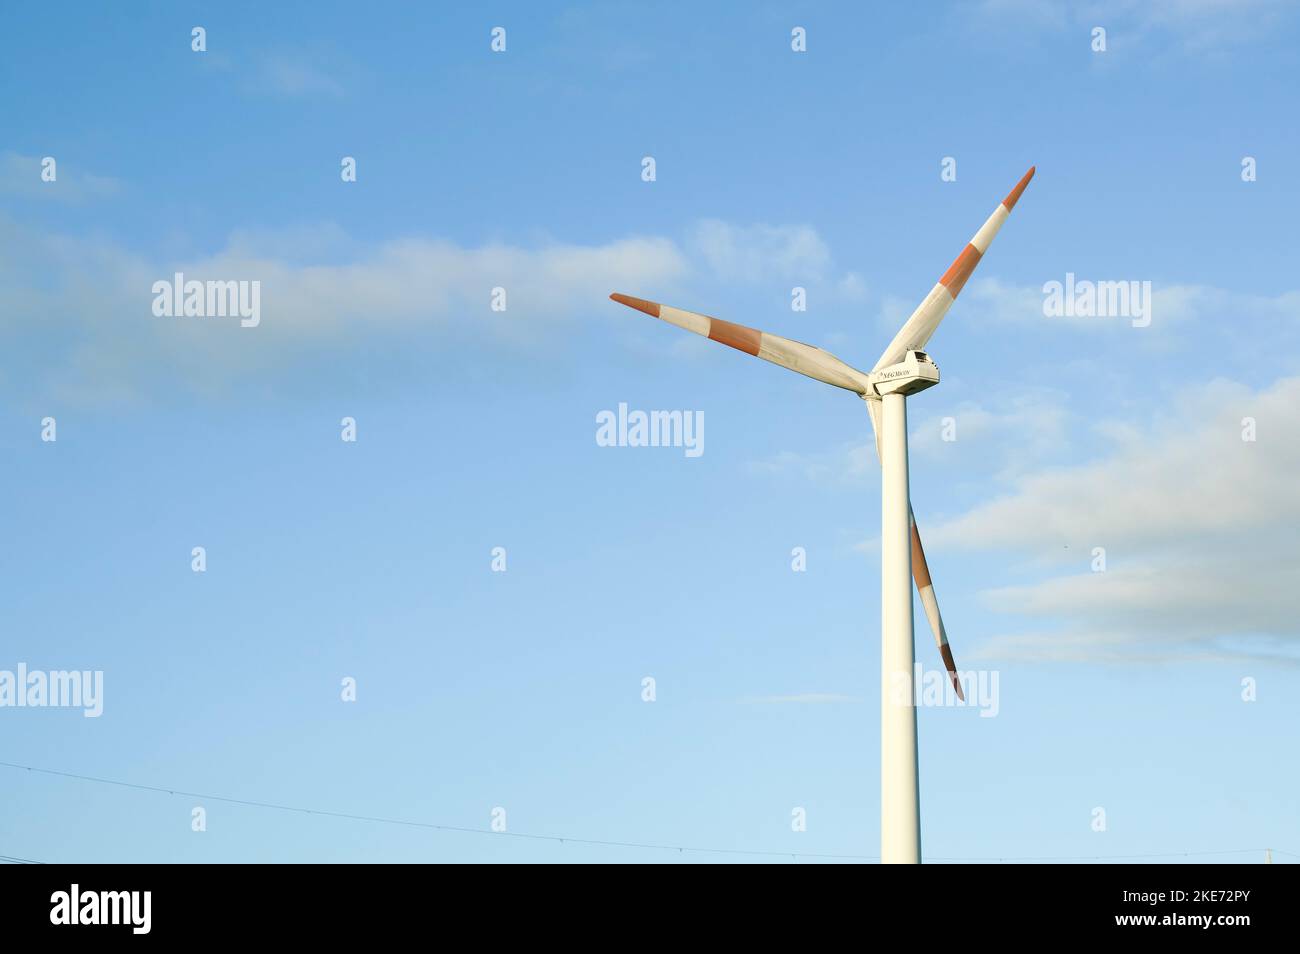 Wind turbine, wind power electricity generator. Renewable, sustainable energy icon Stock Photo